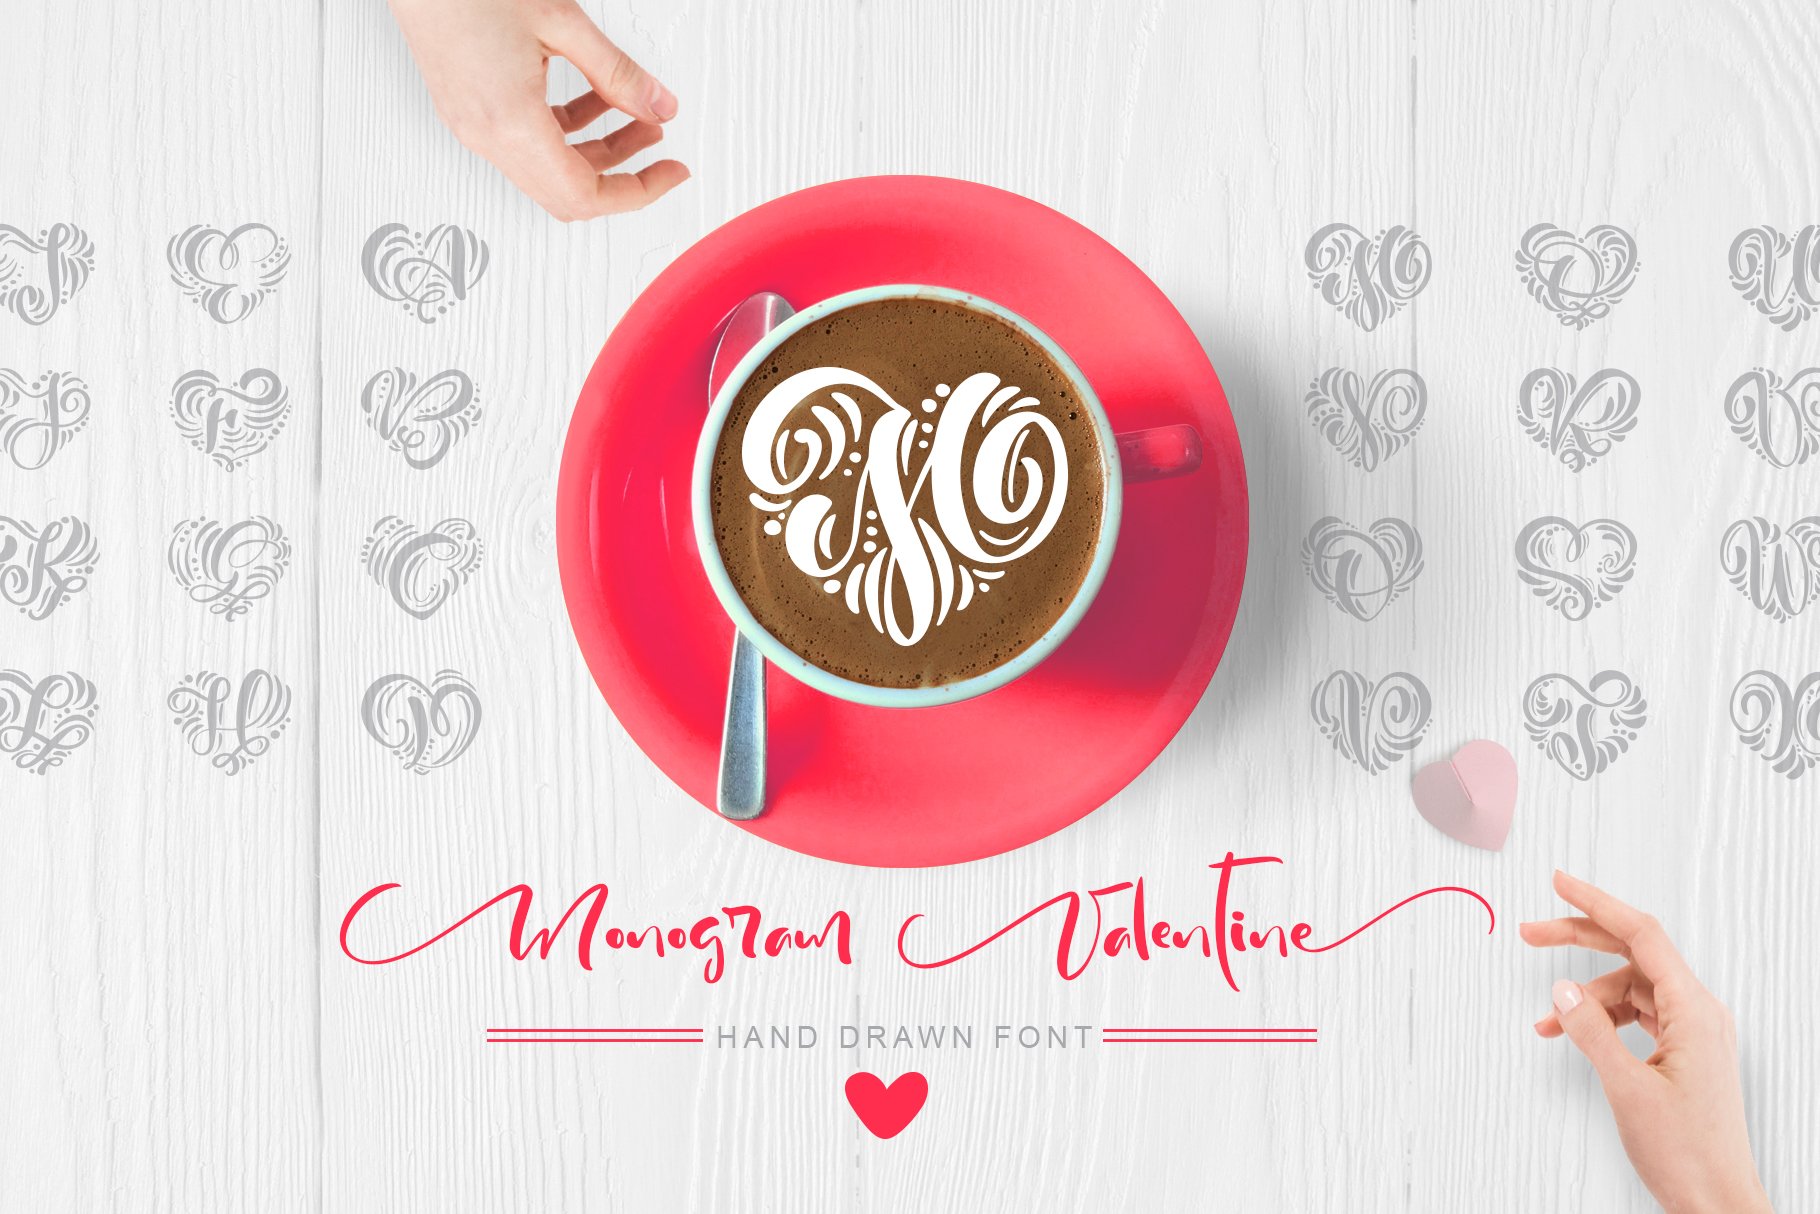 Monogram Valentine Font cover image.